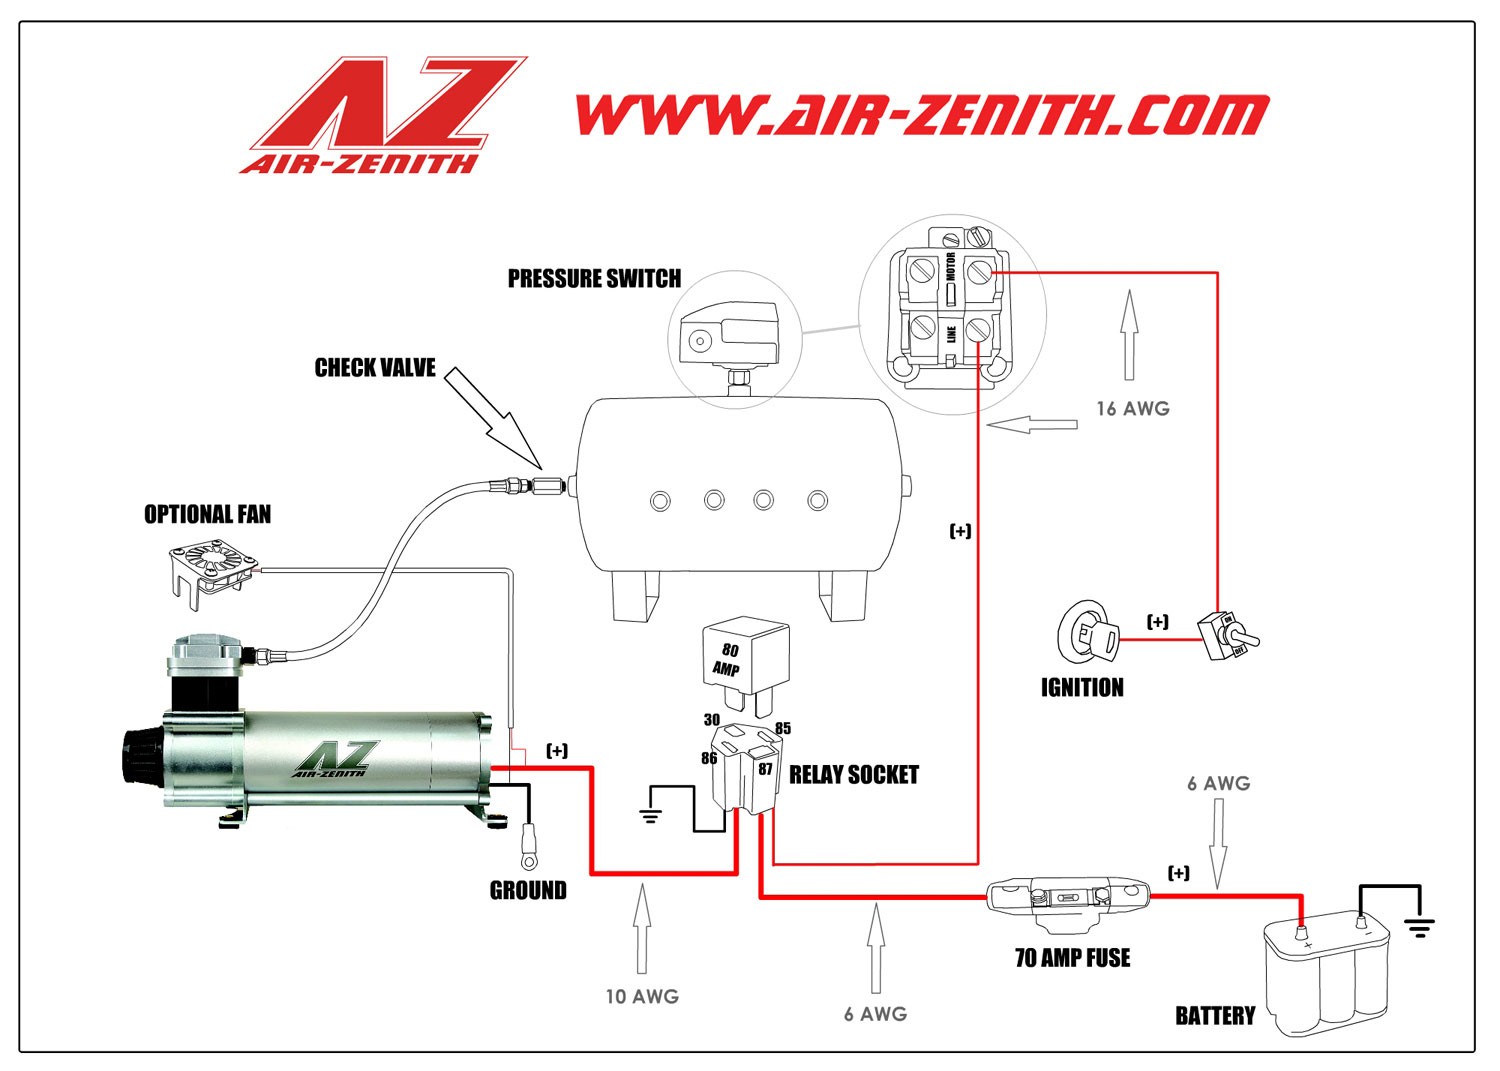 Wel e To Air Zenith New pressor Wiring Diagram